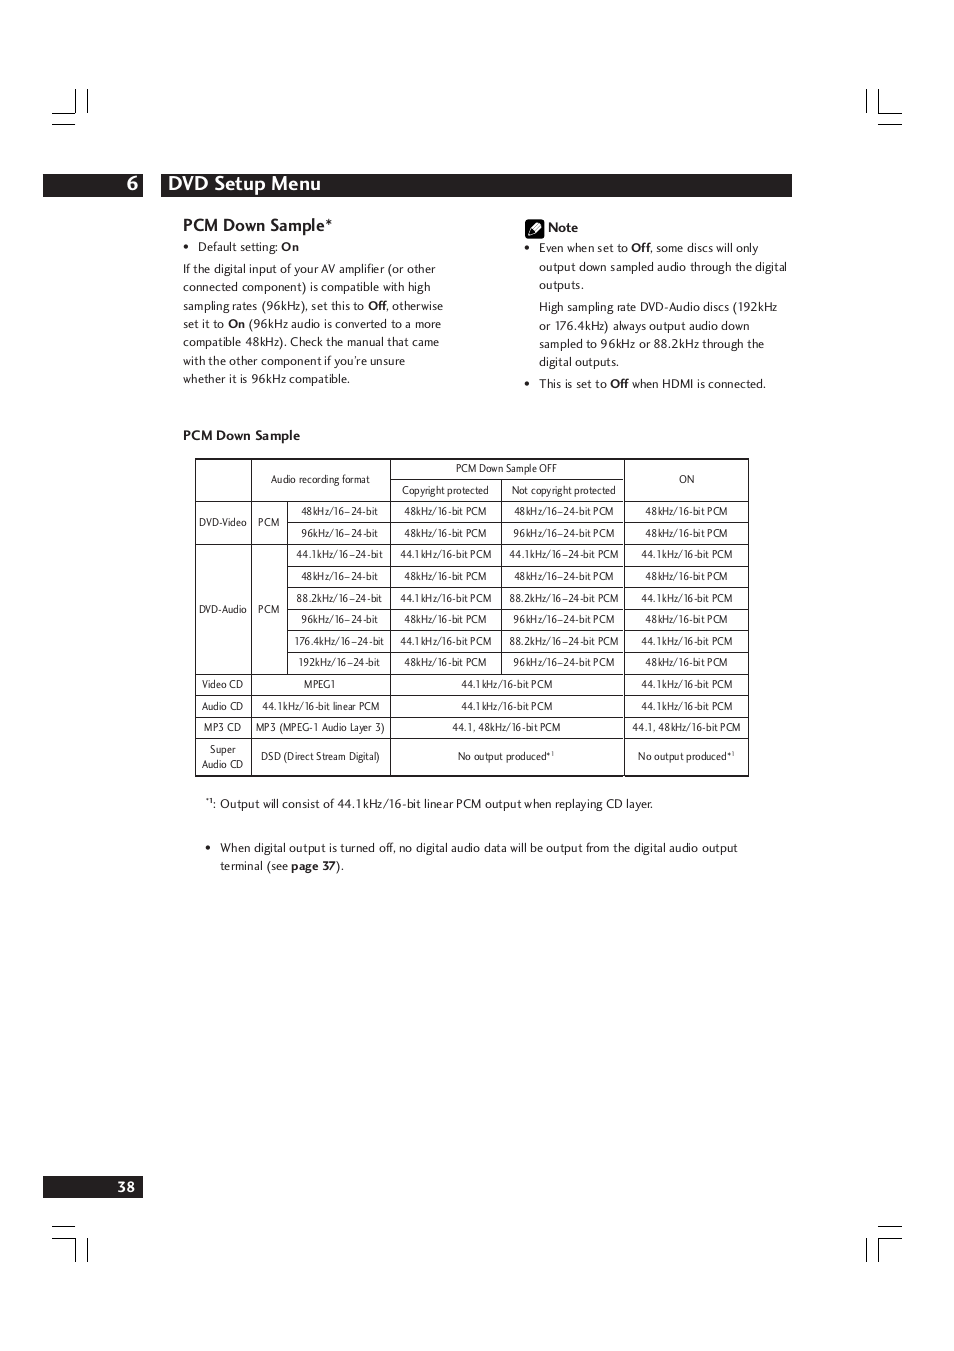 Dvd setup menu 6, Pcm down sample | Marantz DV9600 User Manual | Page 38 / 68